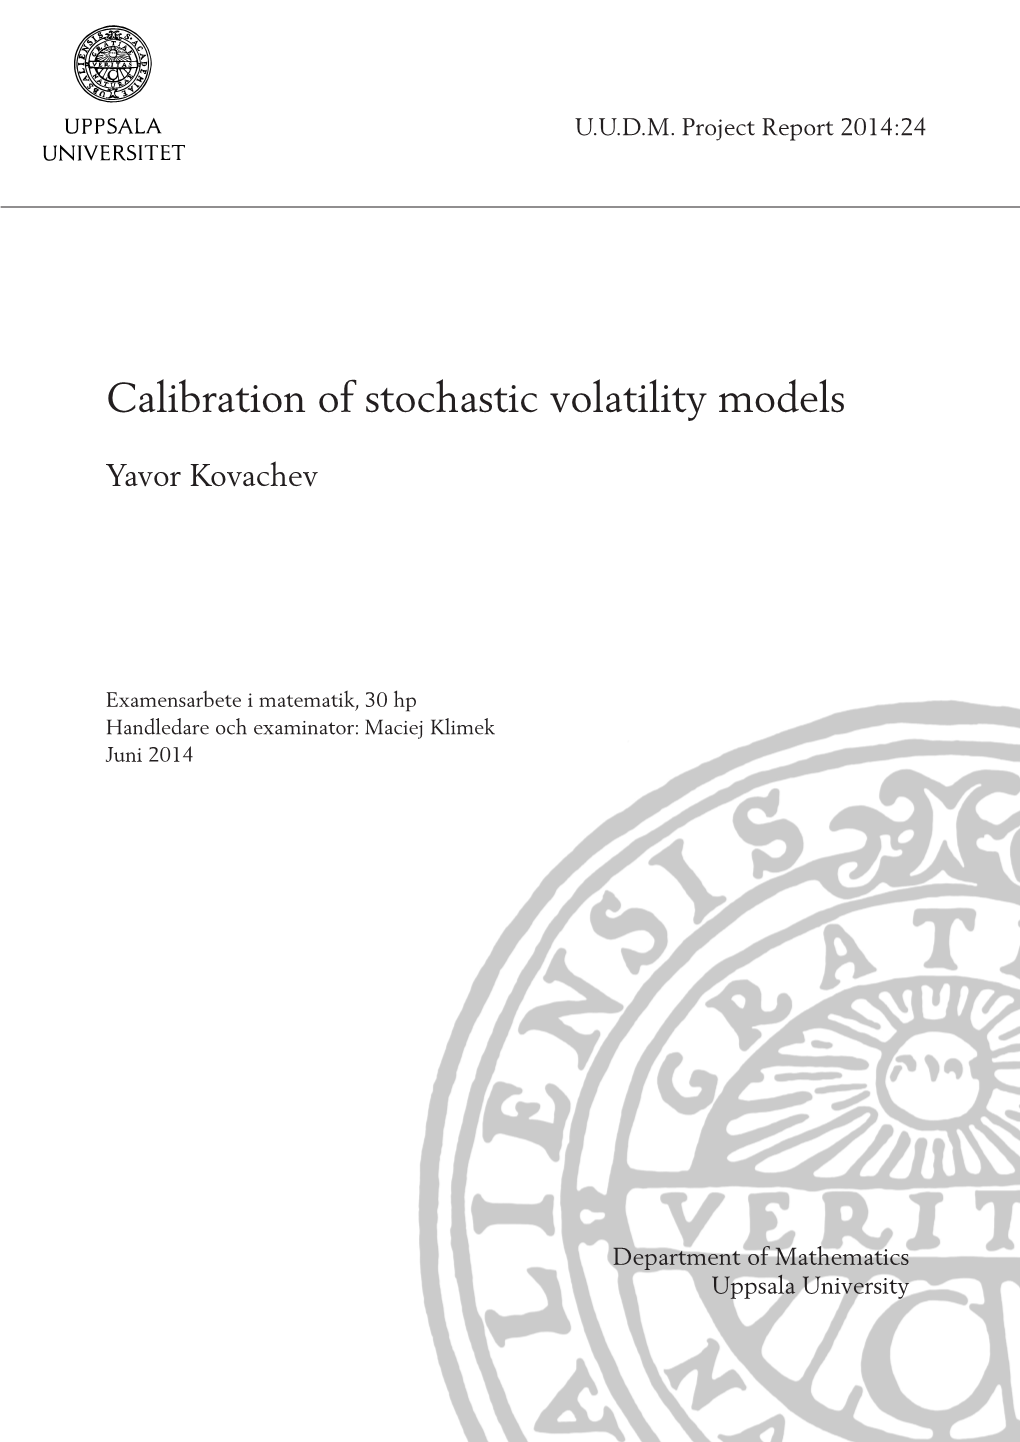 Calibration of Stochastic Volatility Models